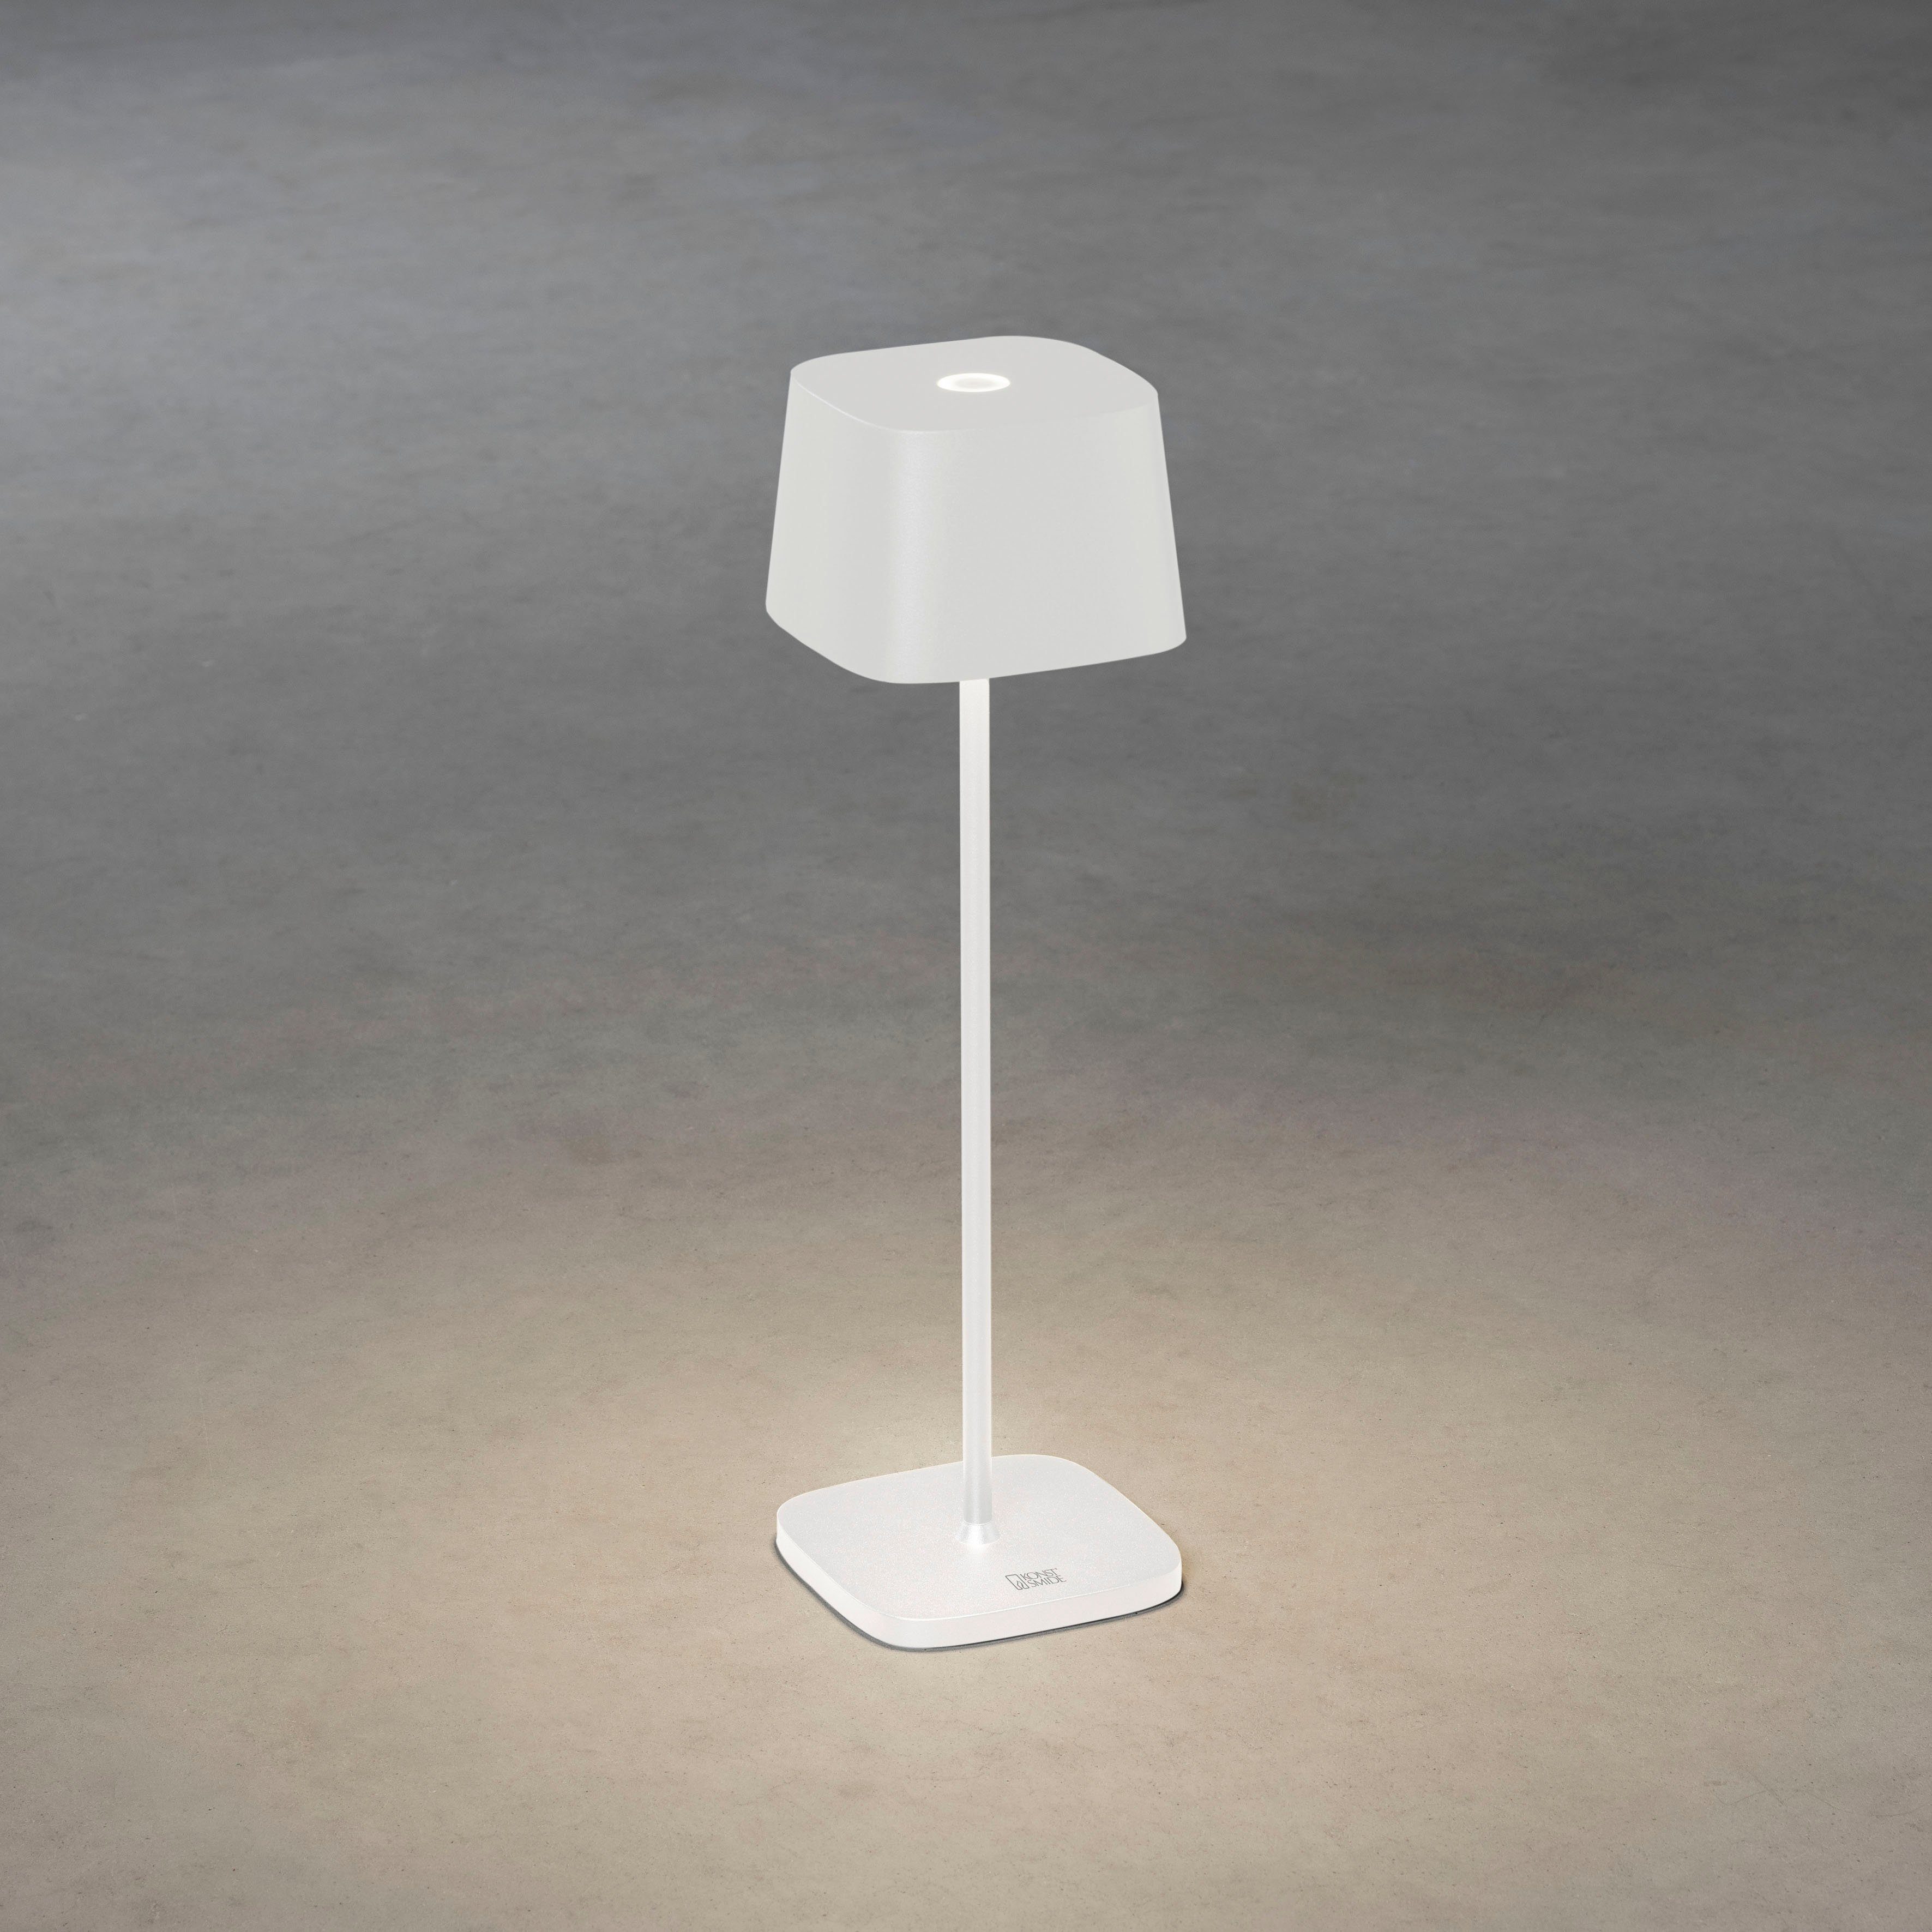 KONSTSMIDE LED Tischleuchte Capri, fest Capri LED LED Warmweiß, weiss, integriert, Farbtemperatur, USB-Tischleuchte dimmbar